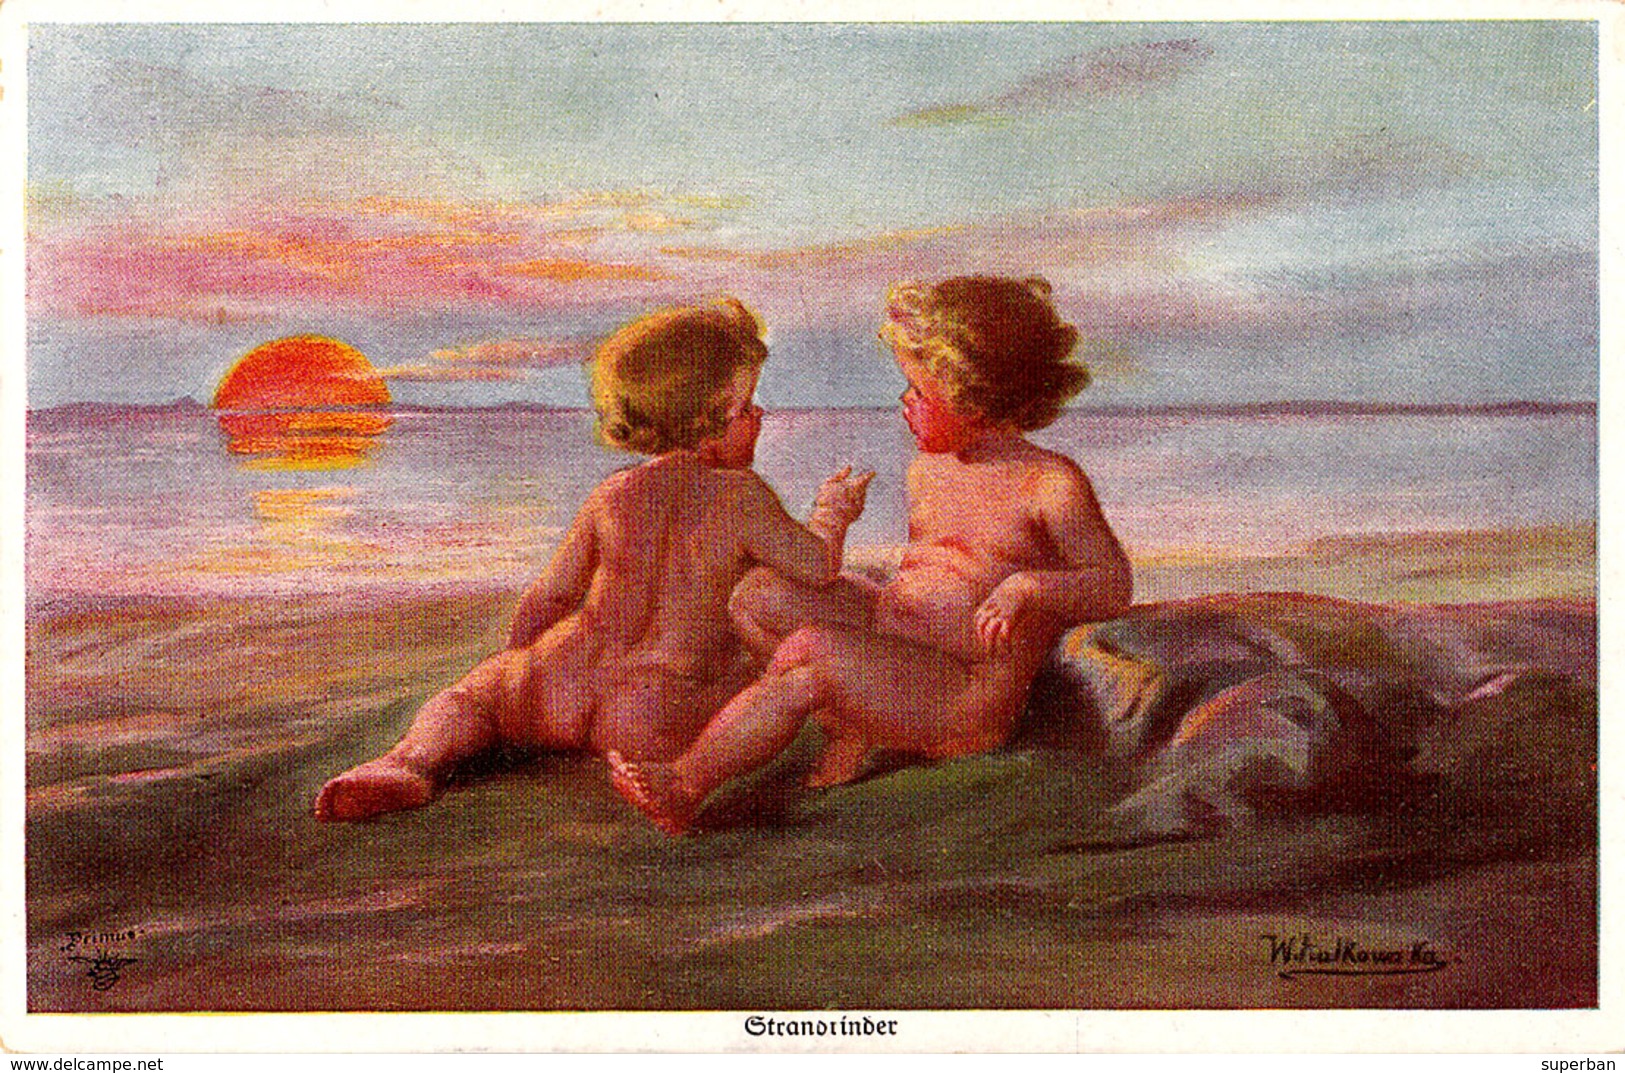 ENFANT : BÉBÉ NU SUR PLAGE / NAKED BABY ON THE BEACH - ILLUSTRATION SIGNÉE / ARTIST SIGNED : W. FIALKOWSKA (ad451) - Fialkowska, Wally